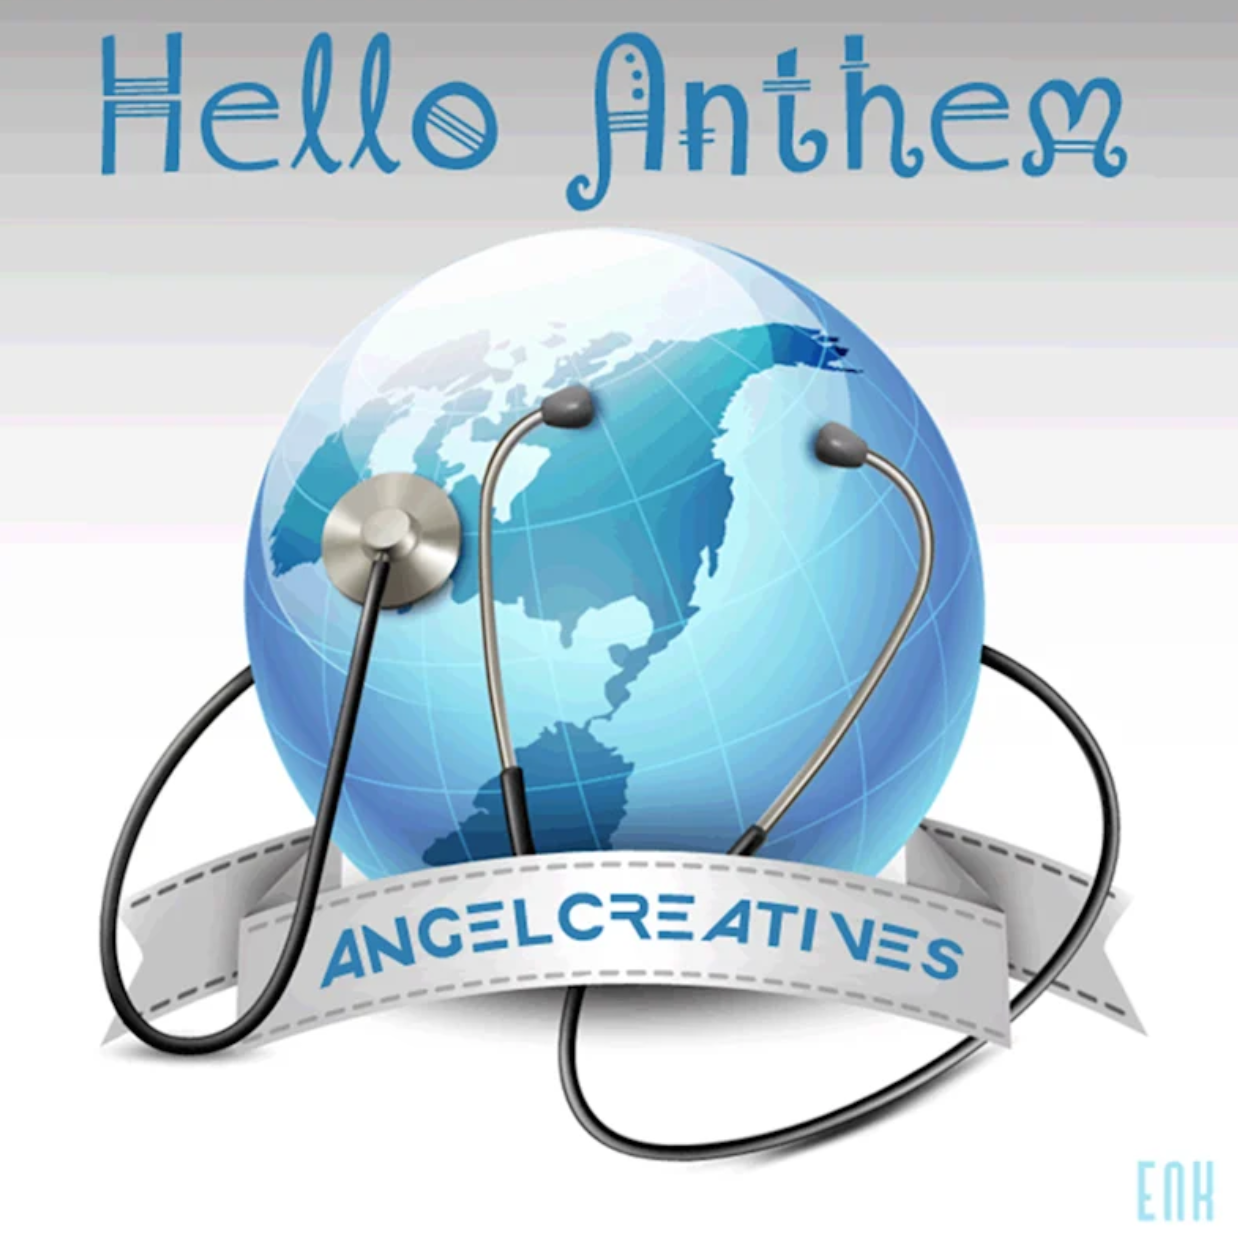 Angelcreatives Hello Anthem